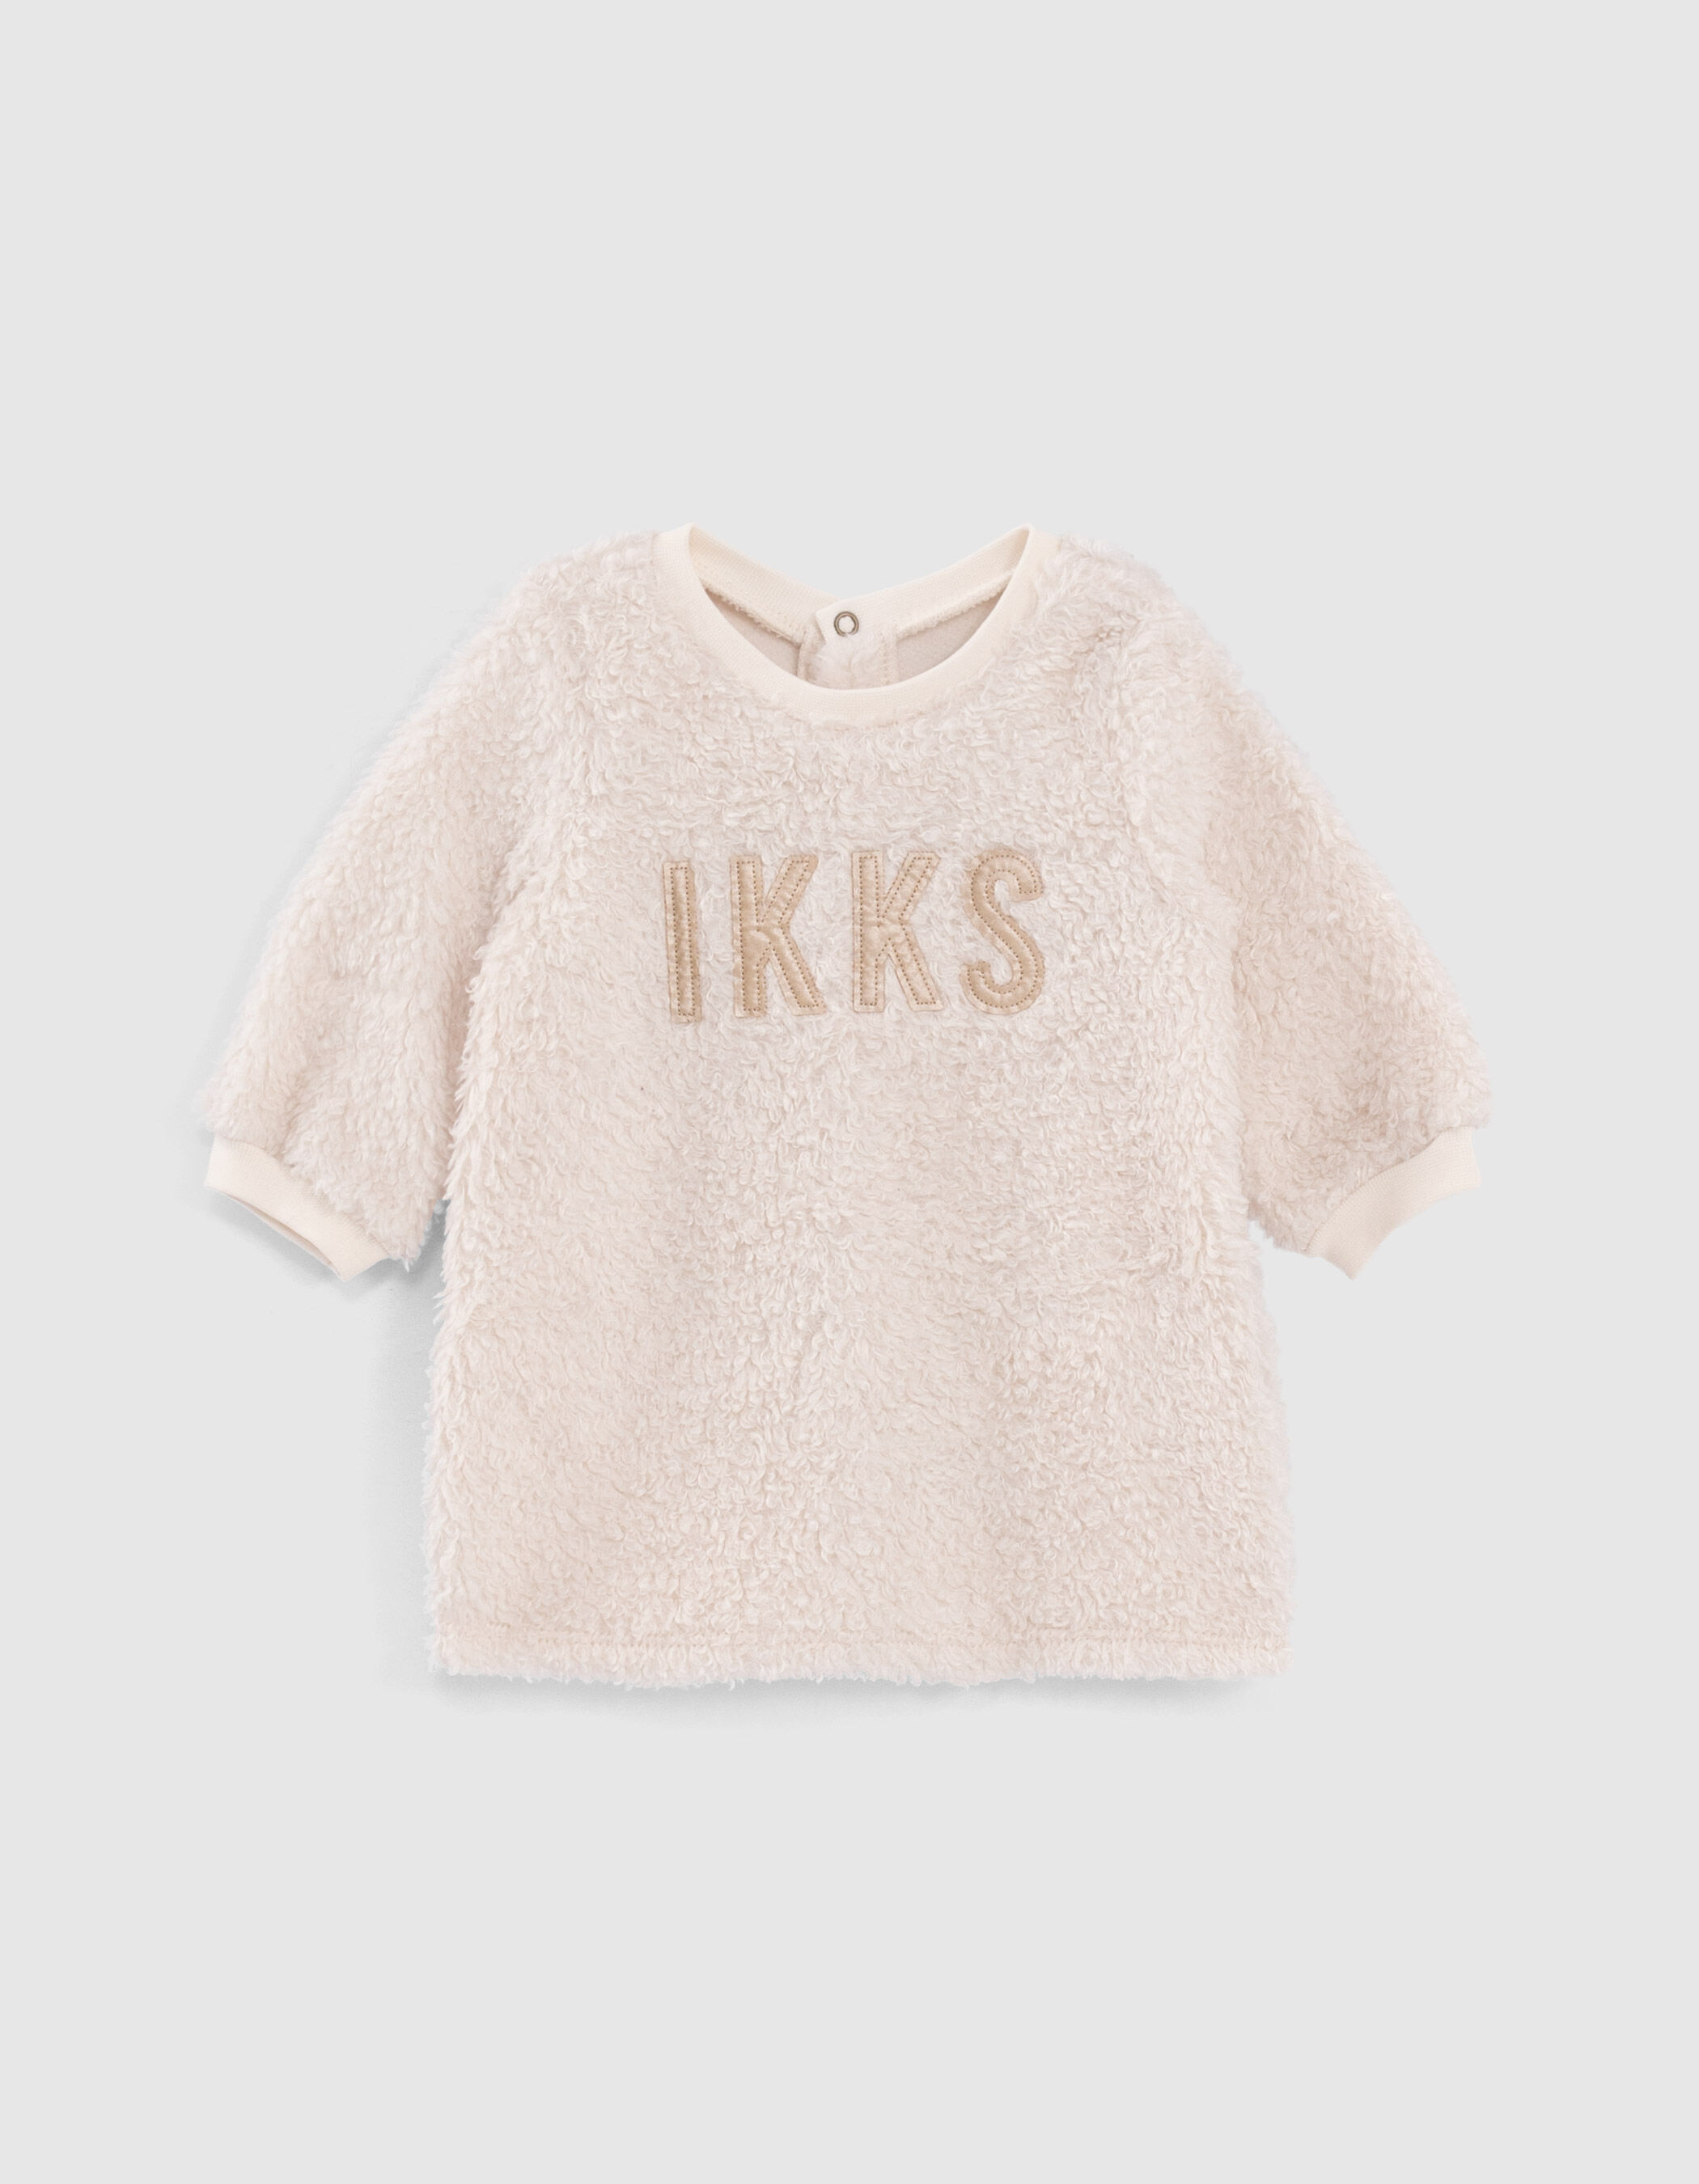 Visiter la boutique IKKSIKKS Sweater Bébé Fille 